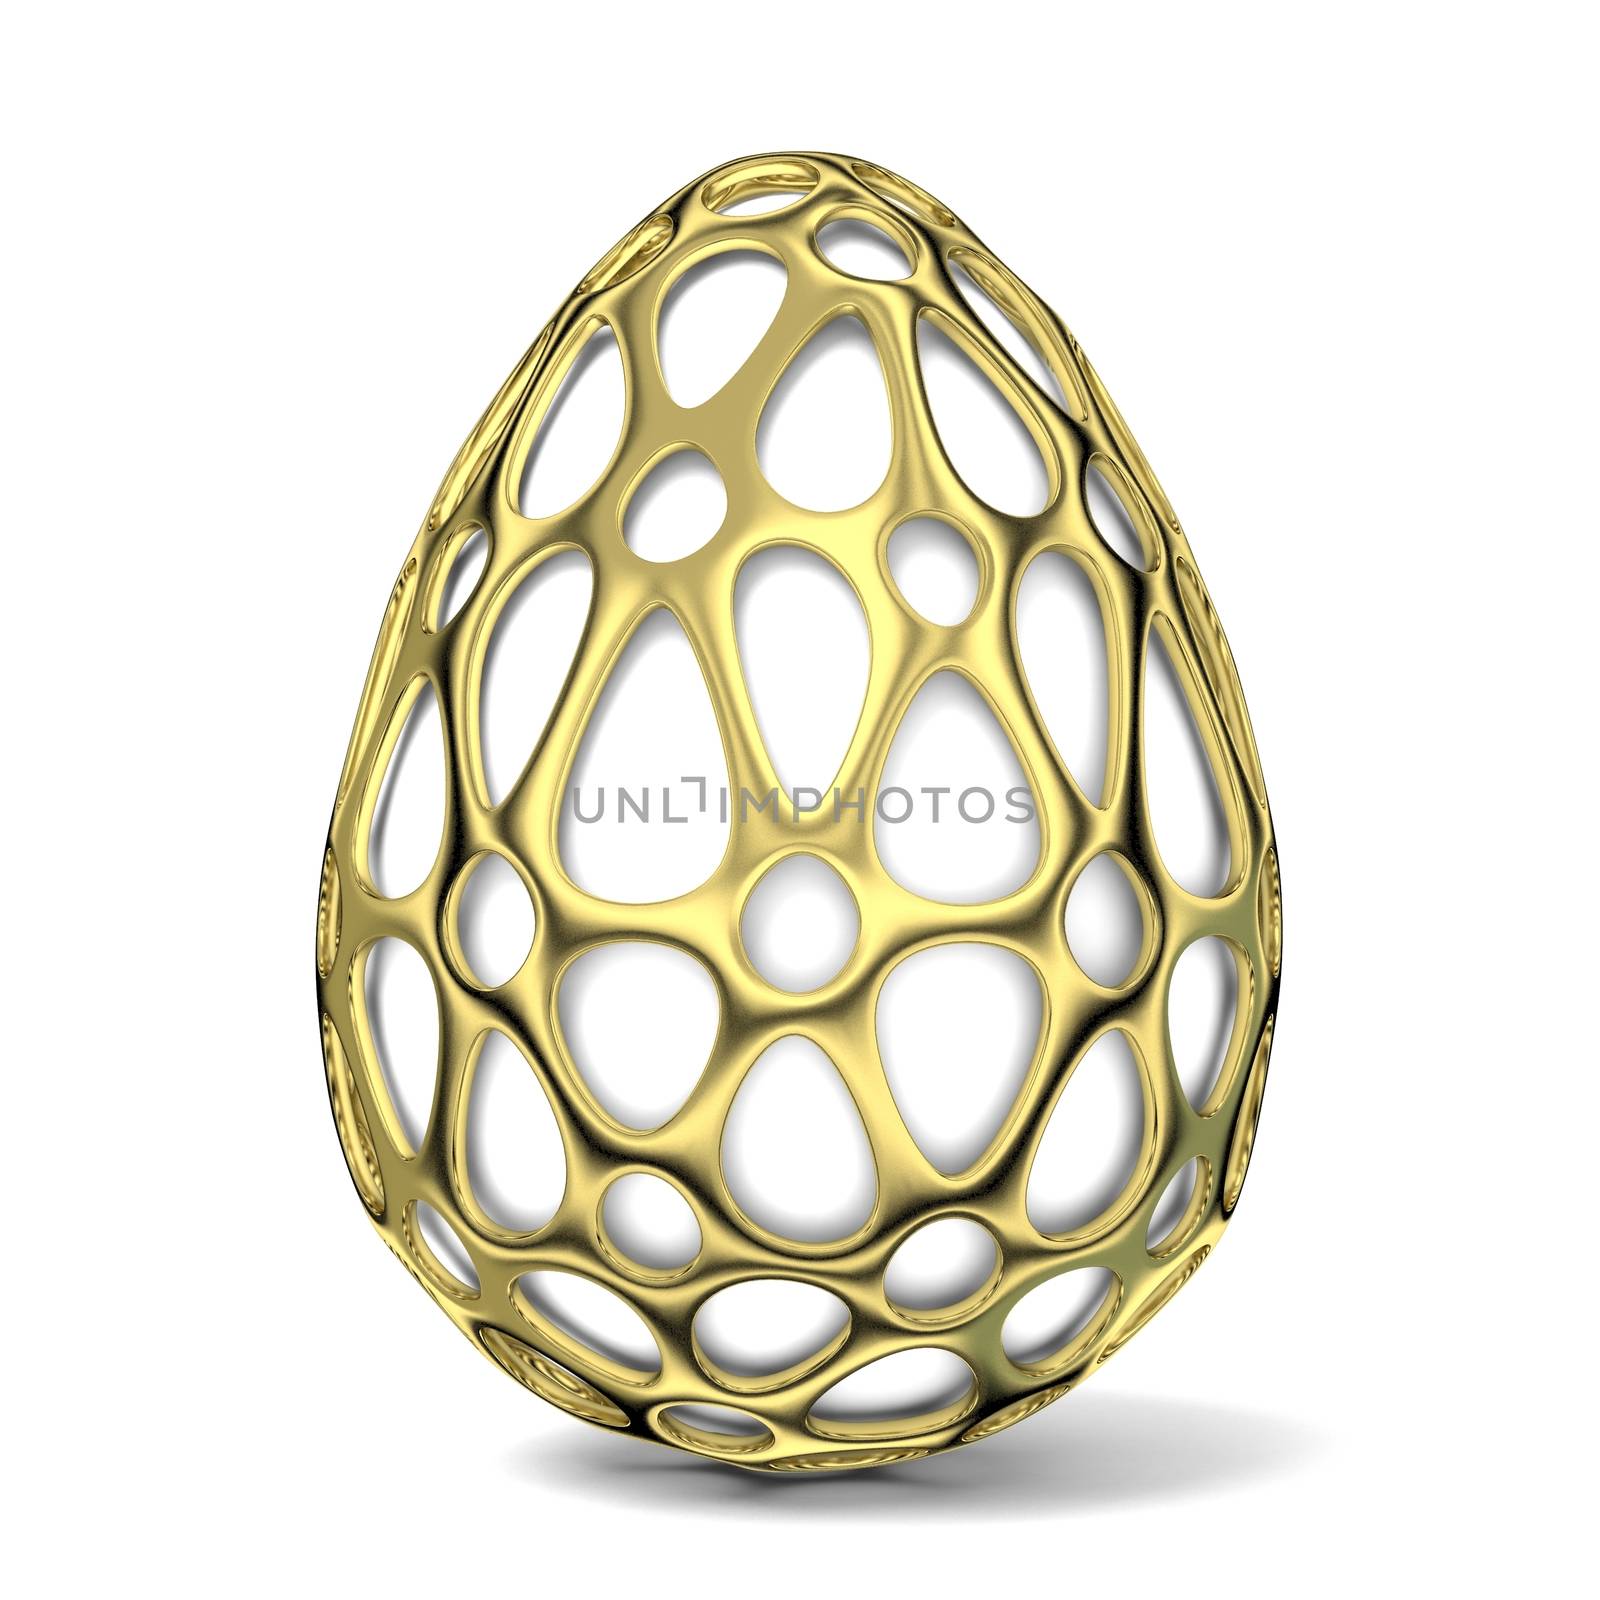 Gold egg ornament. 3D render illustration isolated on a white background